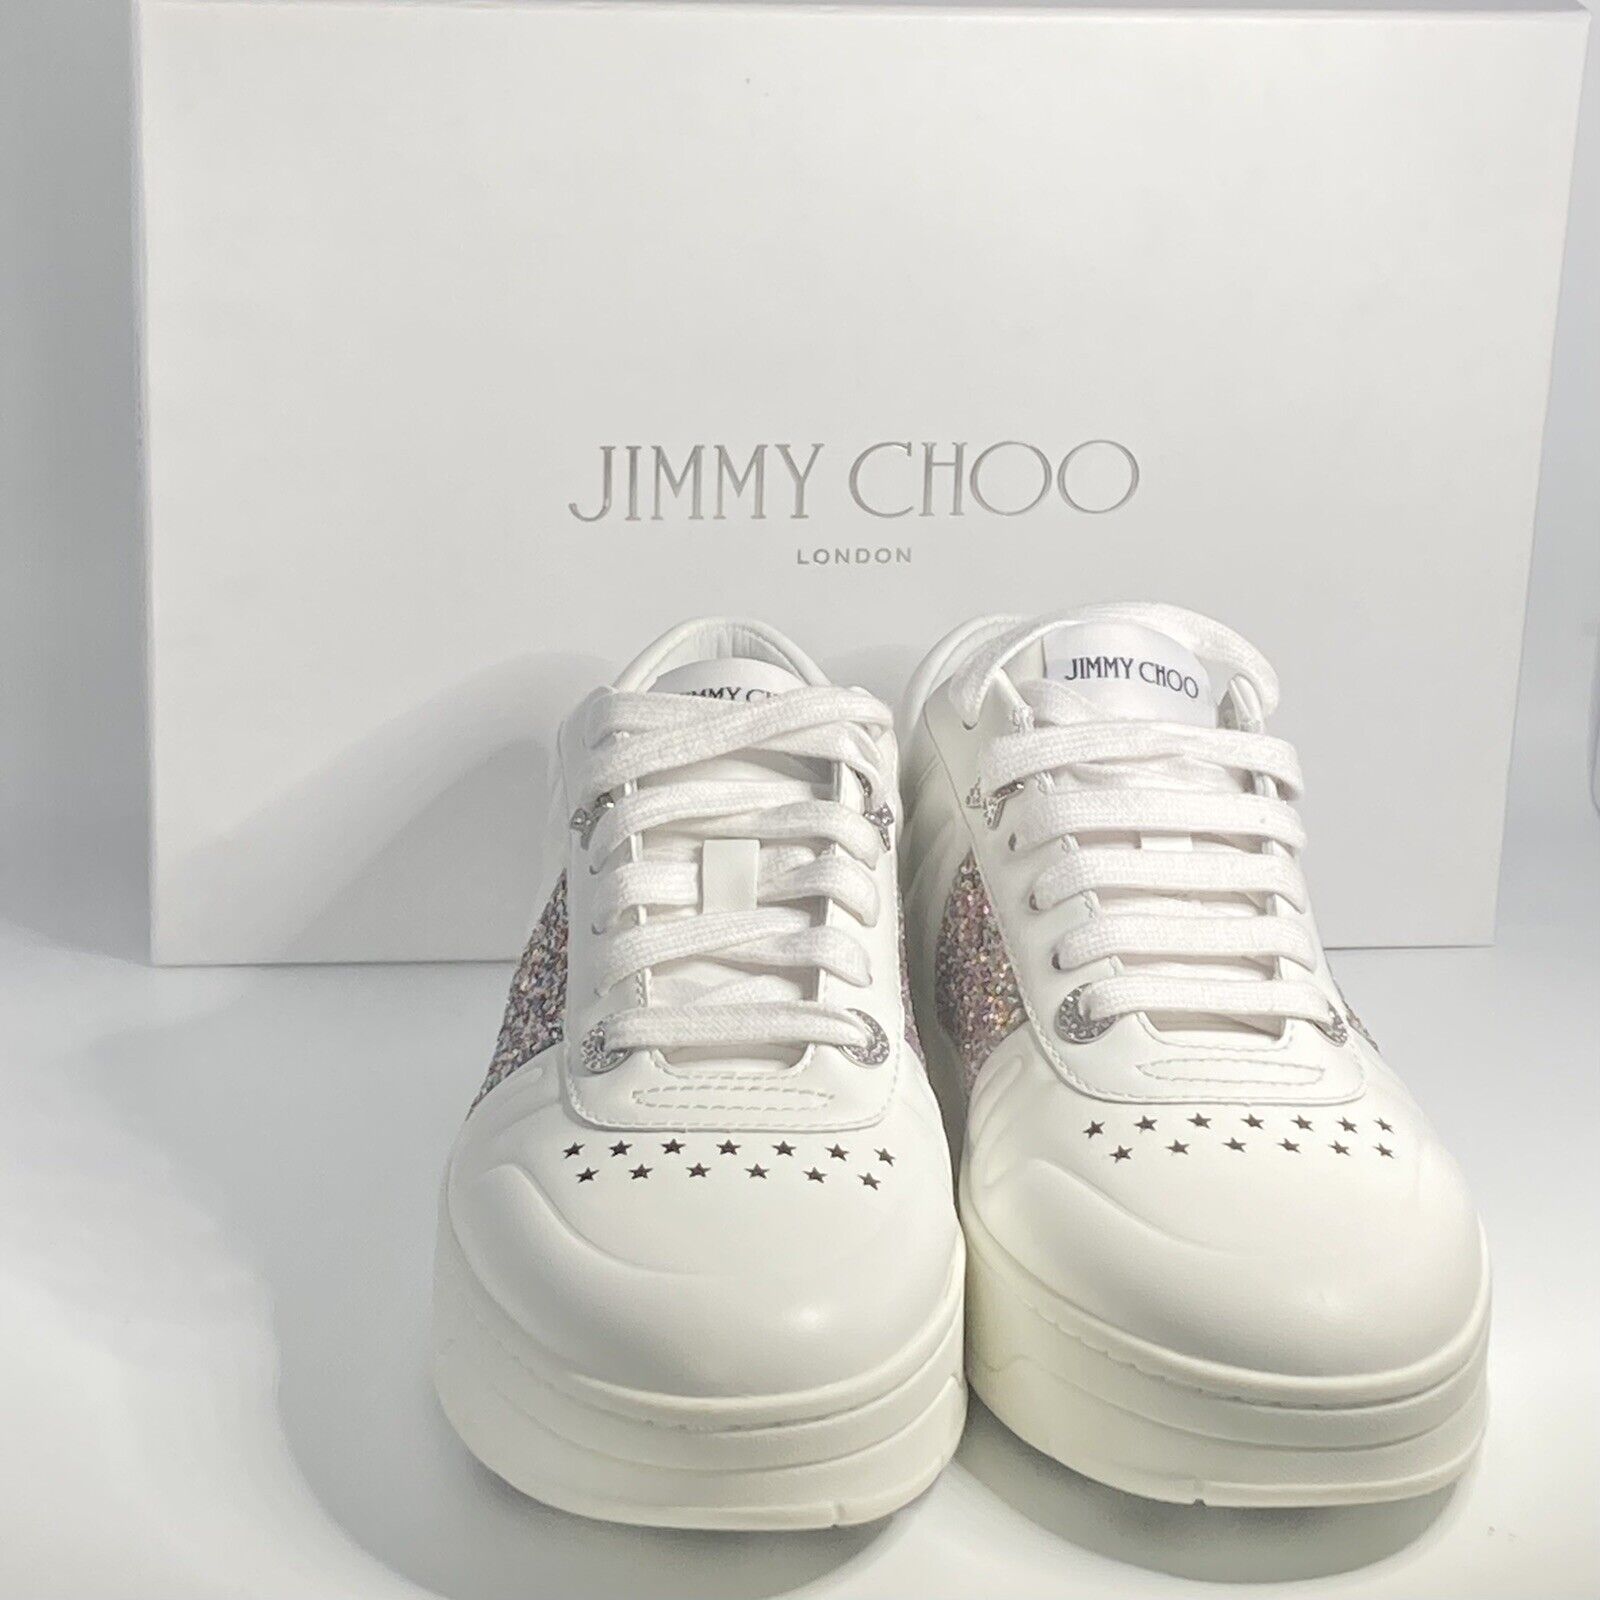 New Jimmy Choo Hawaii Glitter Leather Sneakers Size 37.5EU/7.5US $580